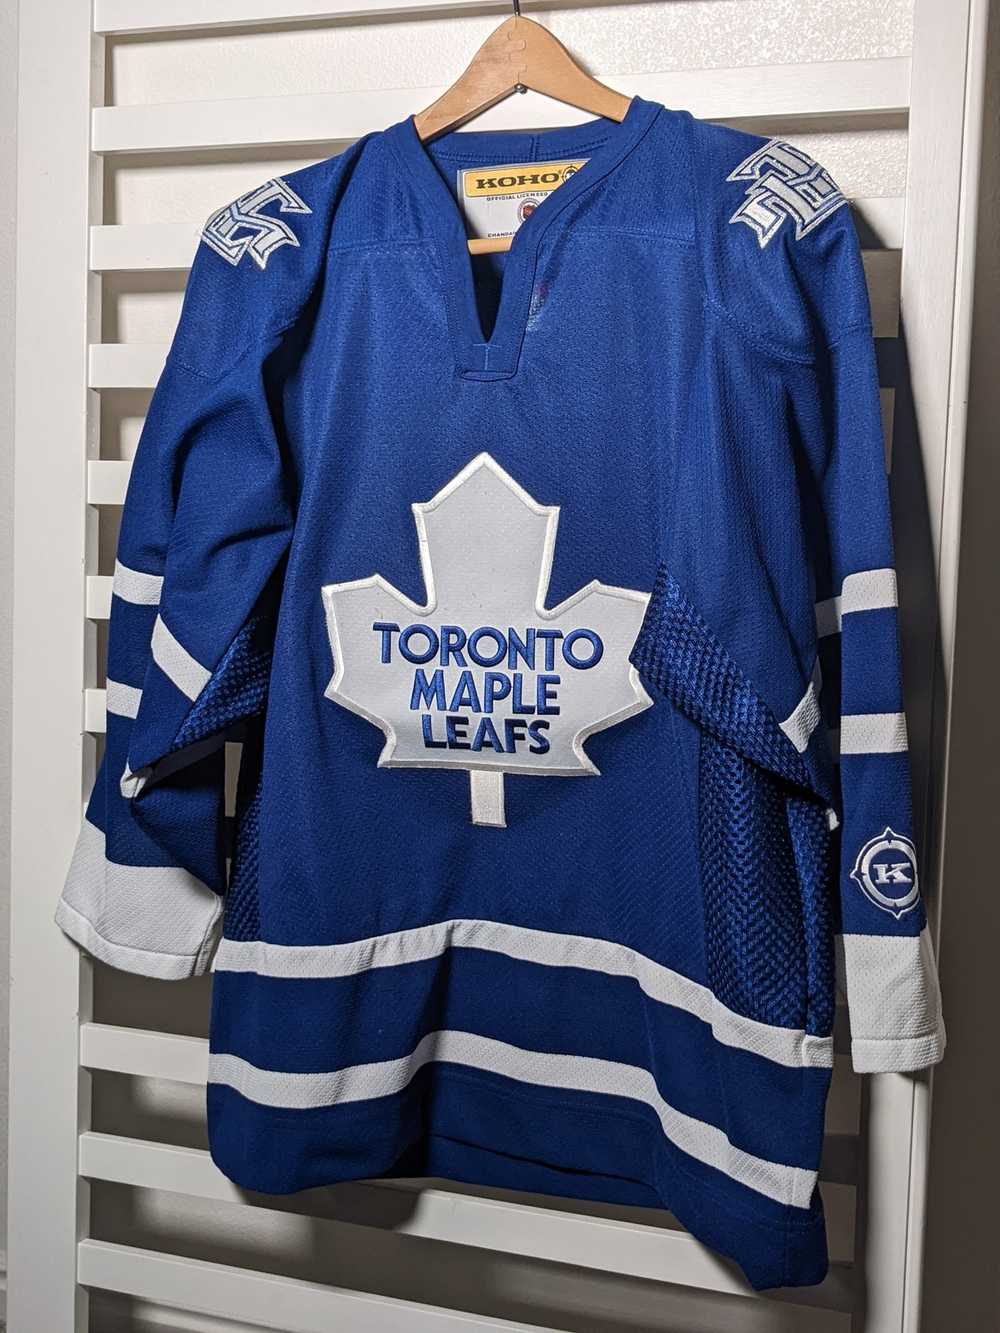 Toronto Maple Leafs Vintage Mighty Mac Jersey 